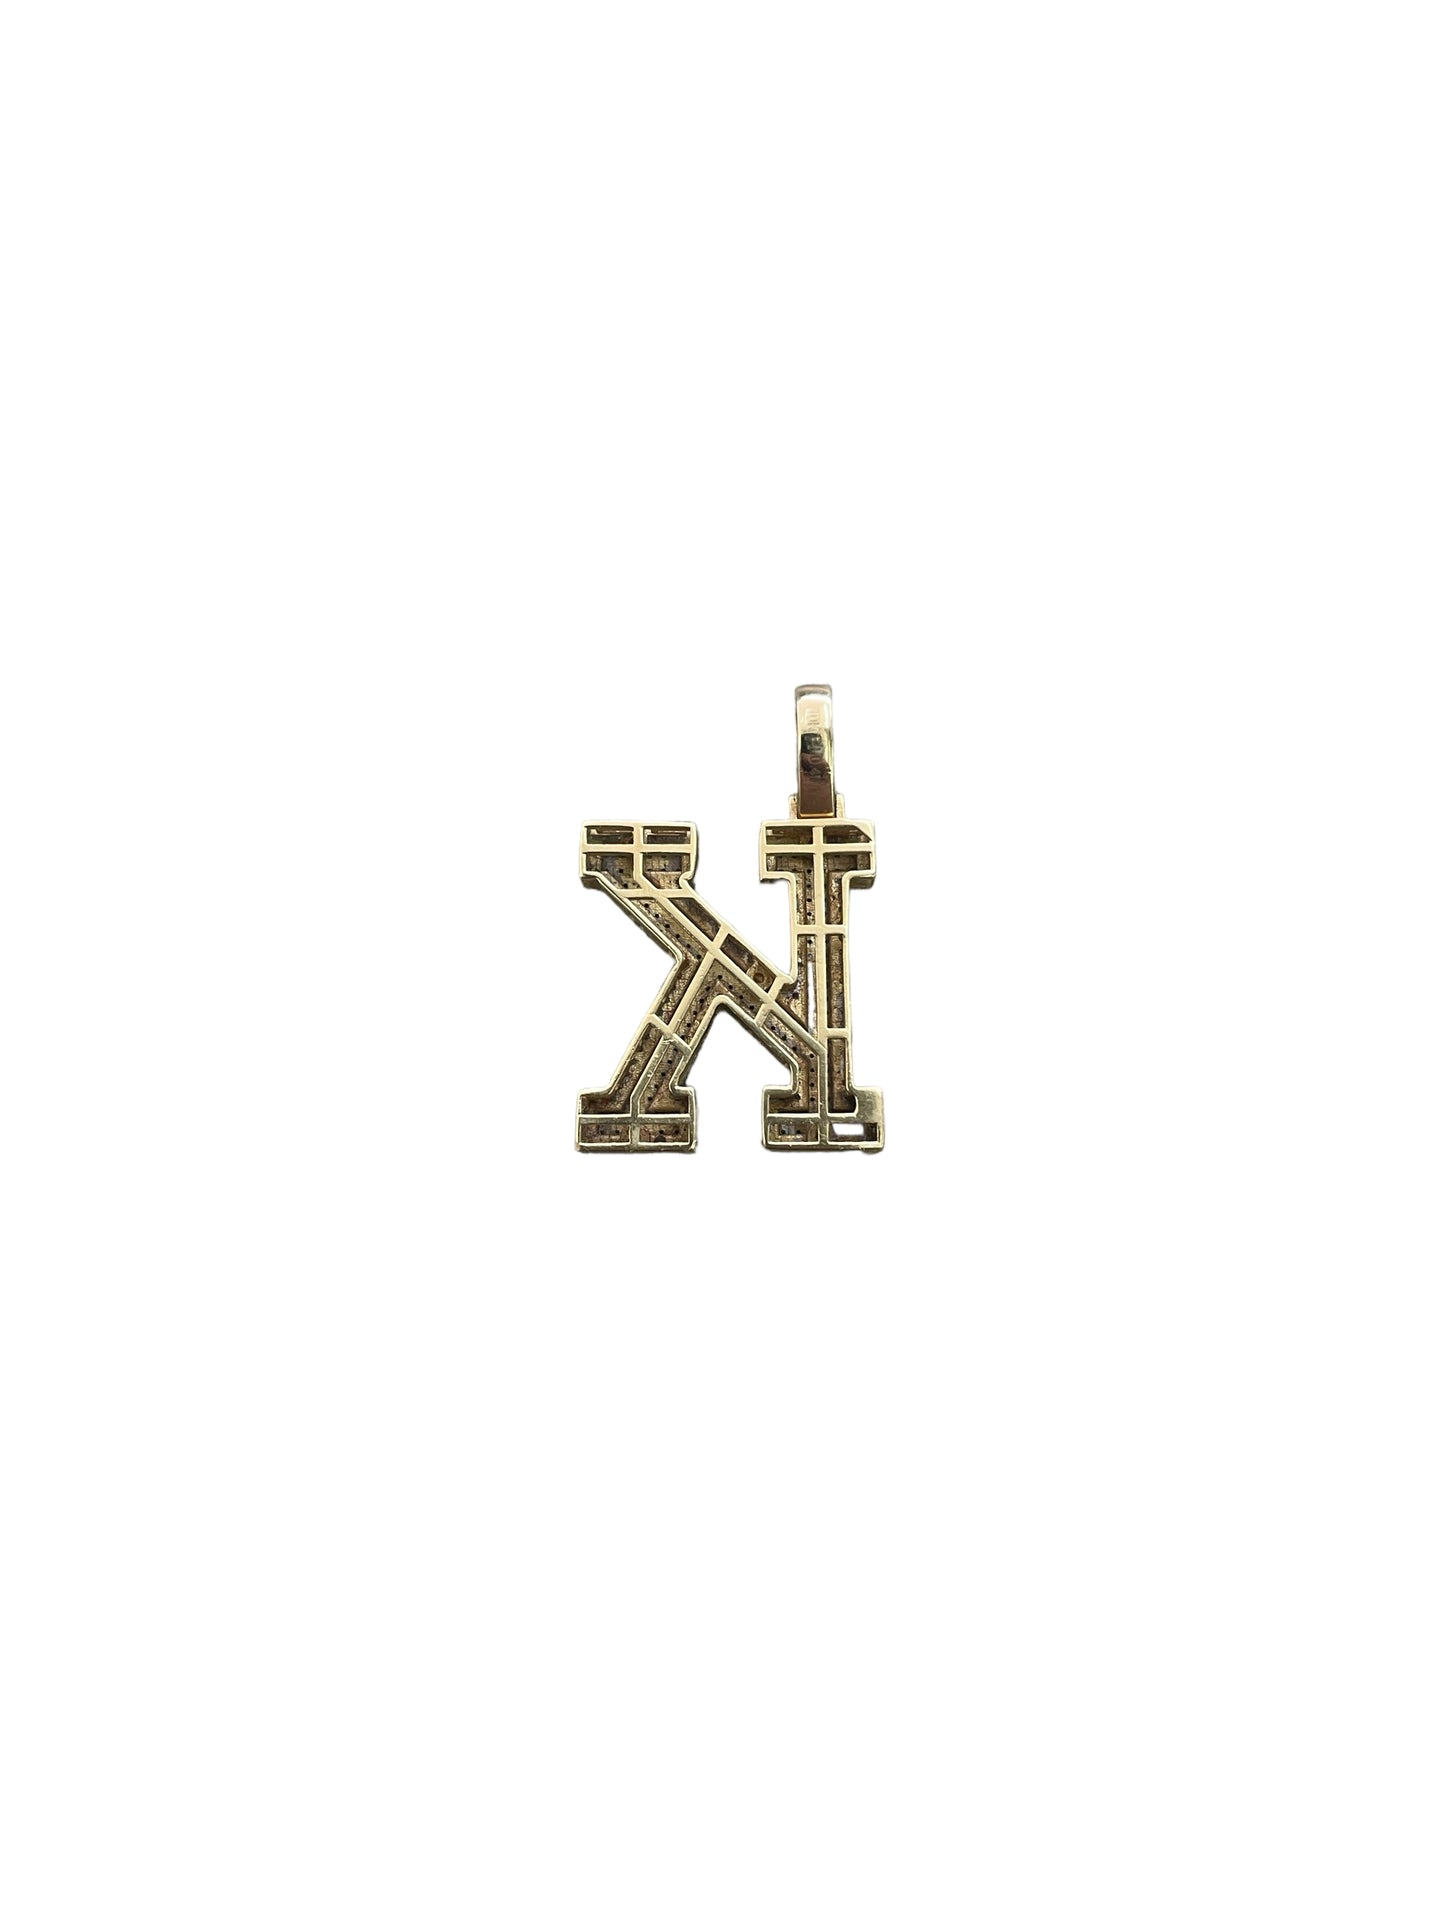 10K Yellow Gold Diamond Letter "K" Charm (4.7 Grams)